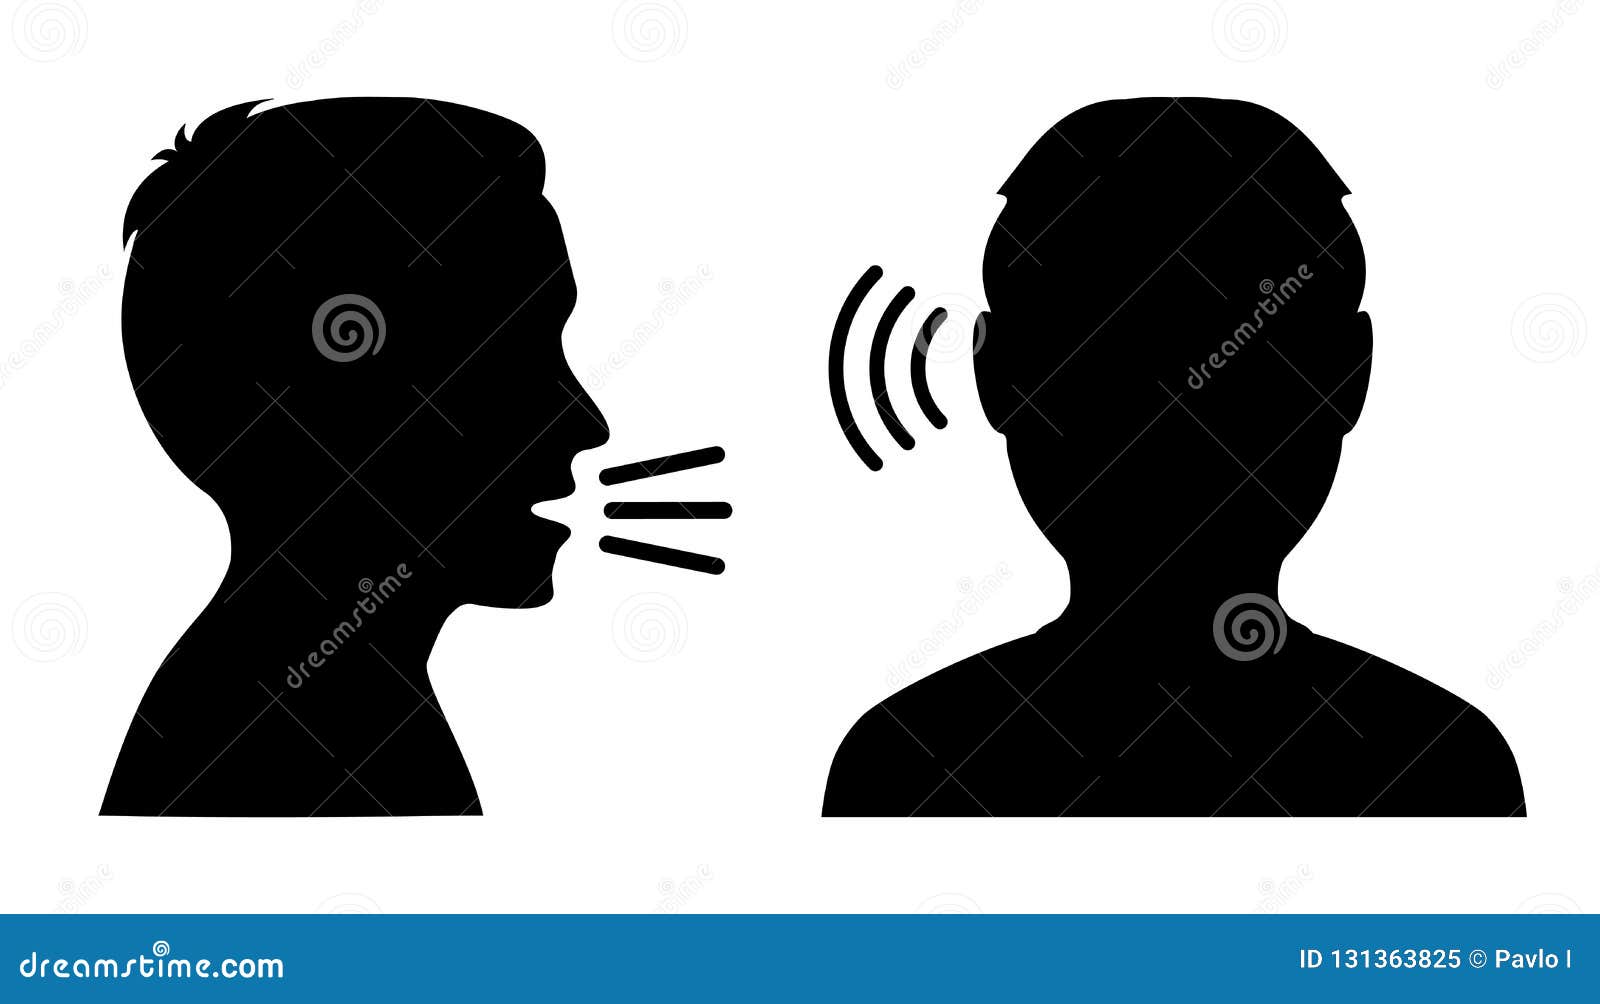 people talk: speak and listen - 